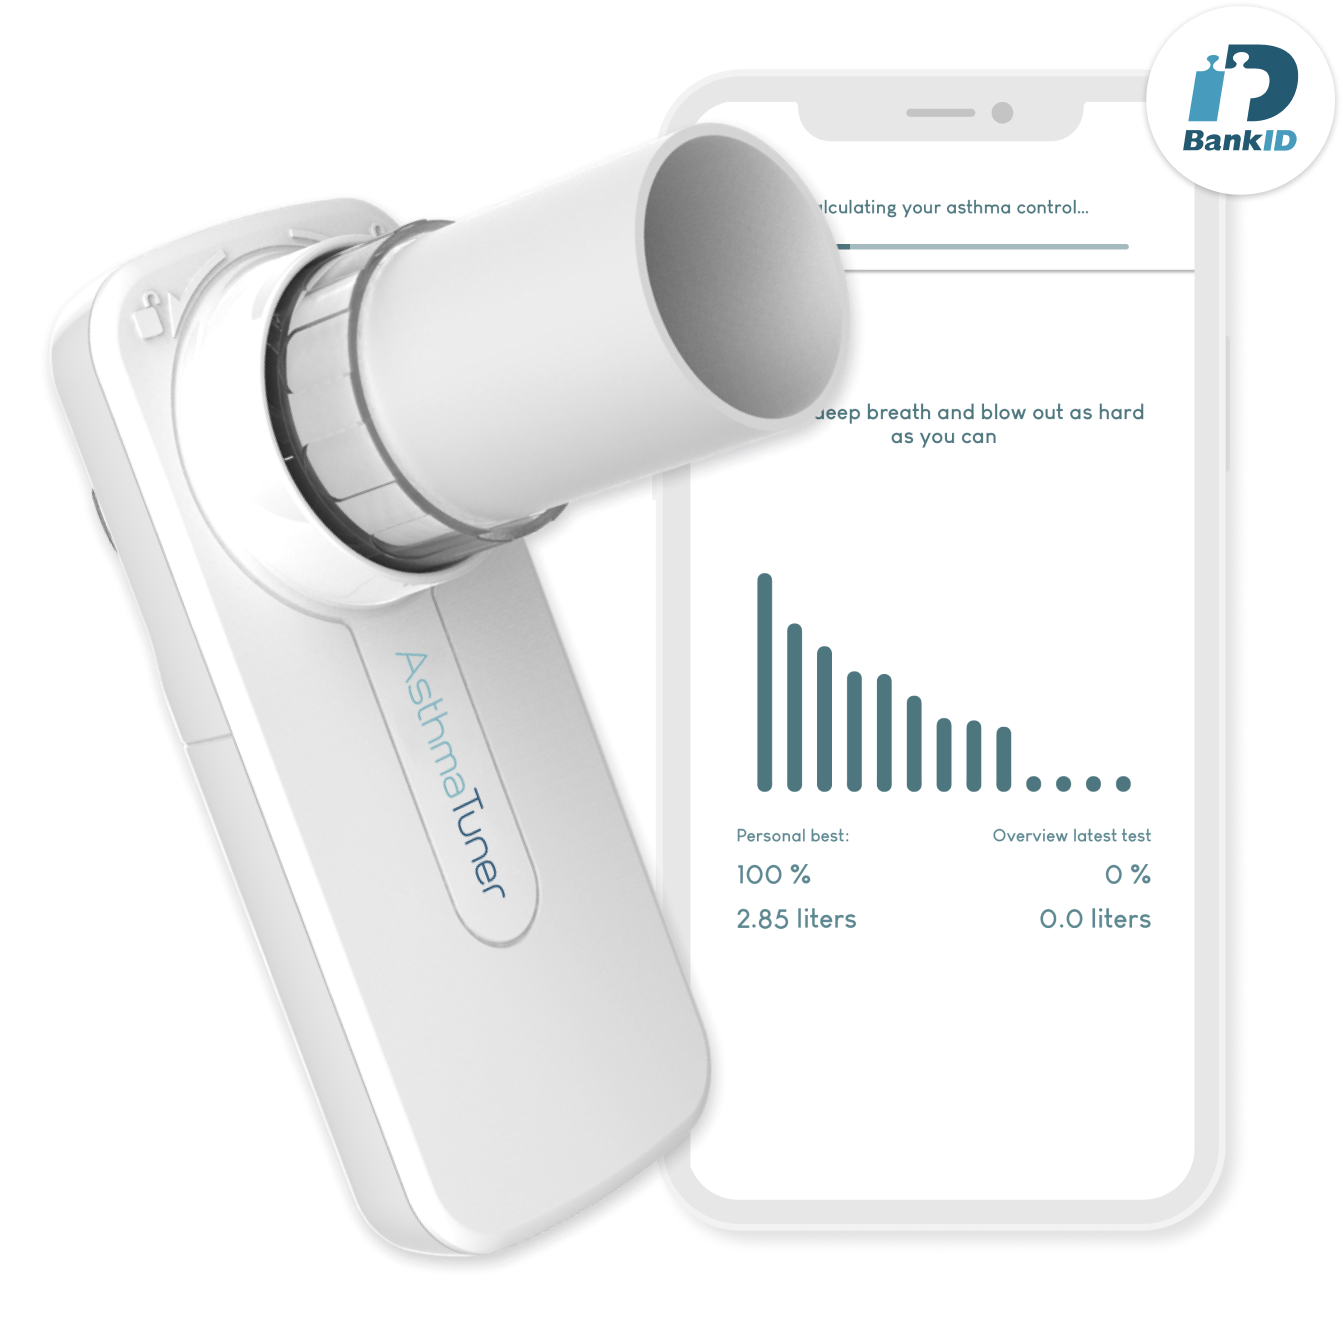 AsthmaTuner Digital Spirometer